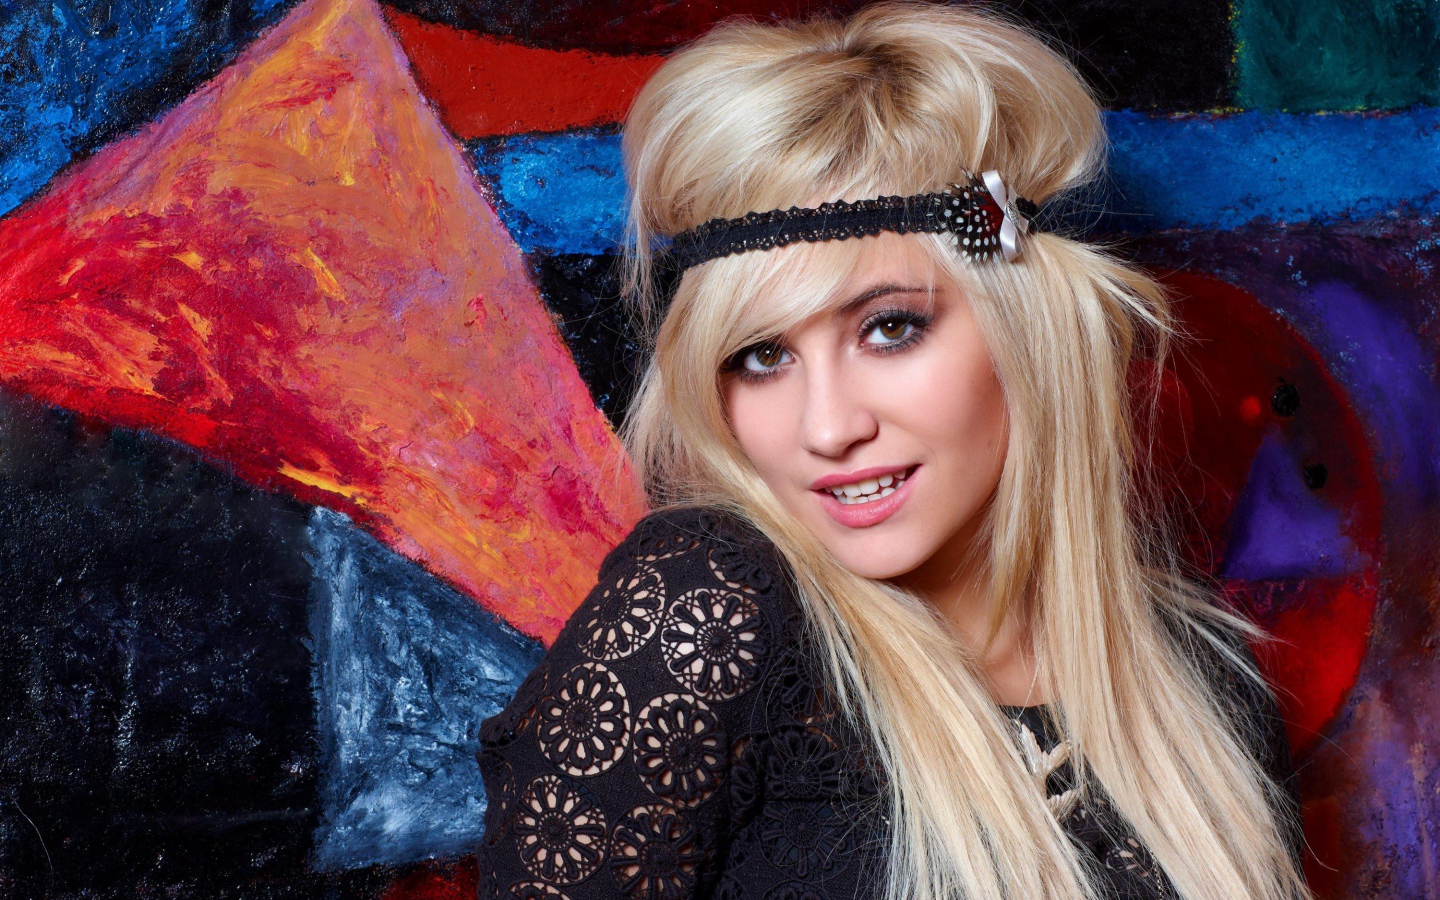 Beautiful blonde singer Pixie Lott with a headband